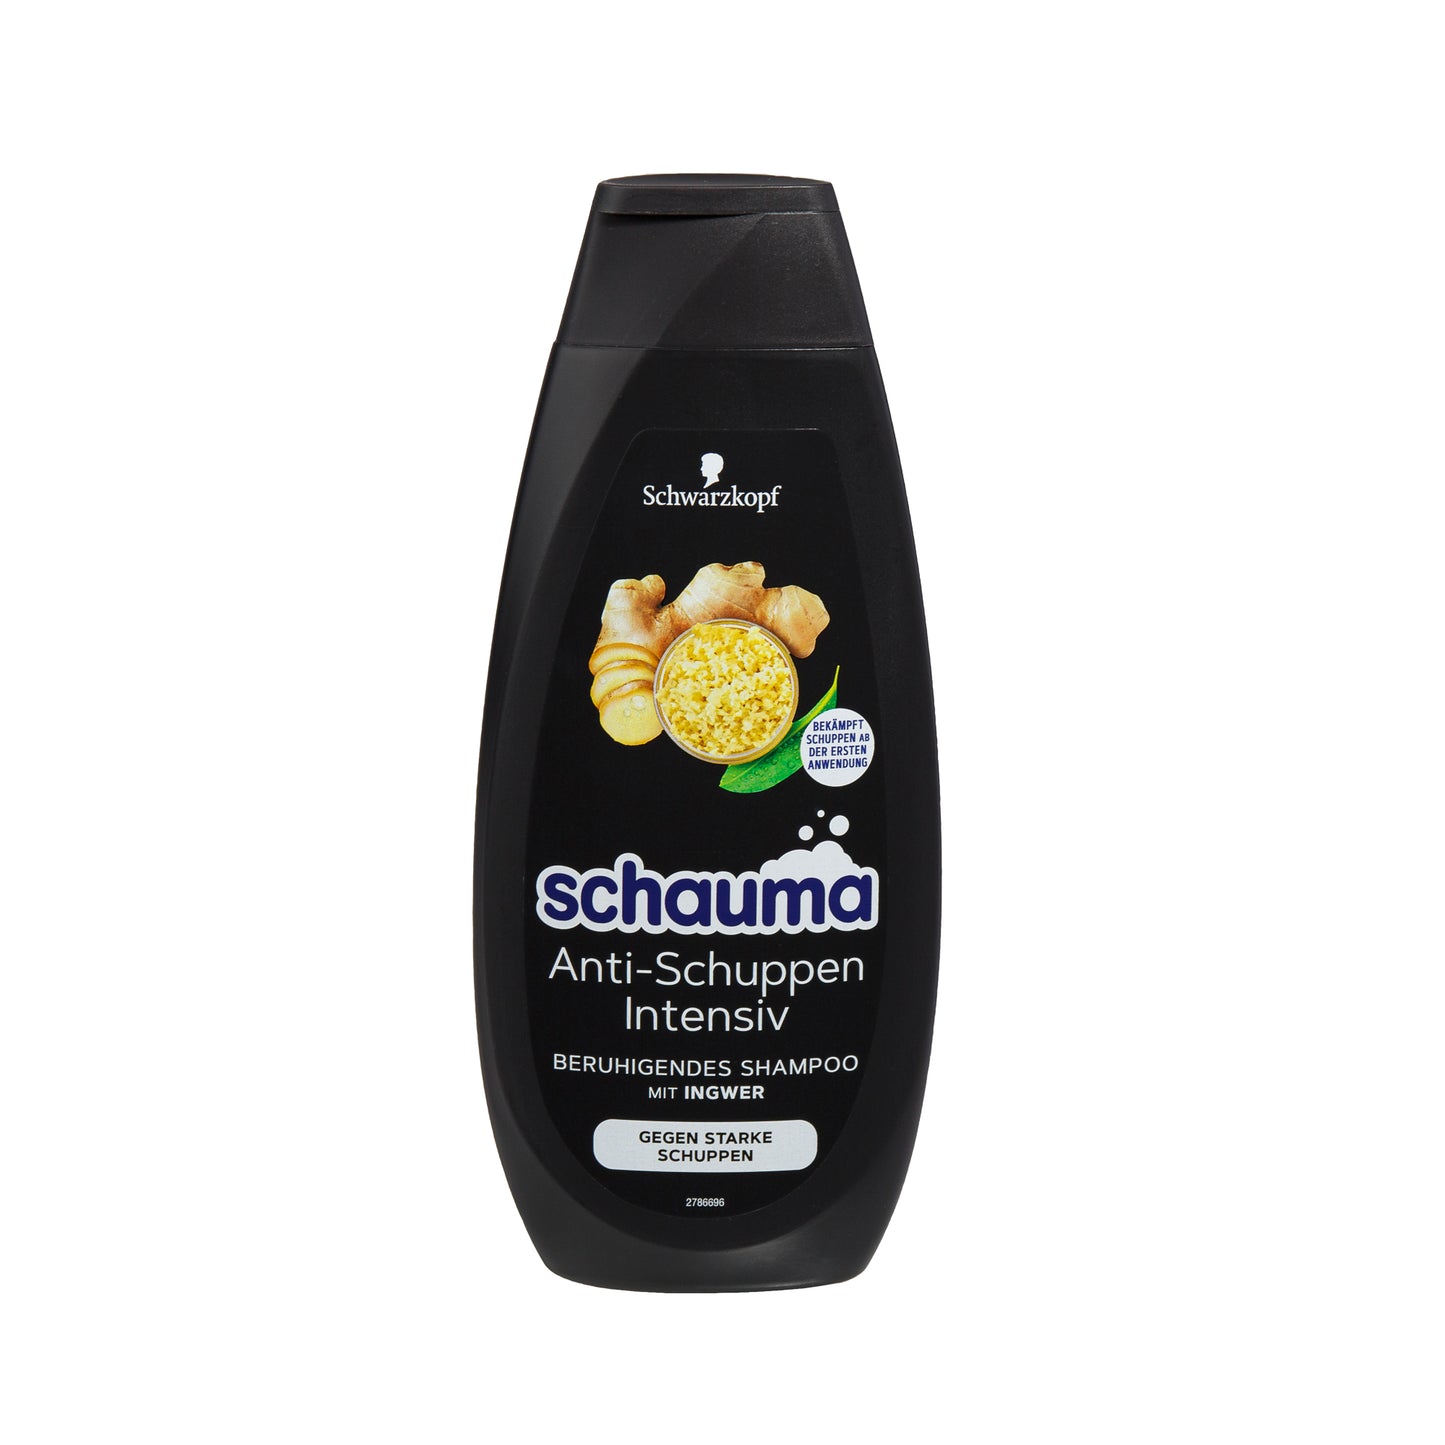 Primary Image of Intensive Anti-Dandruff Shampoo